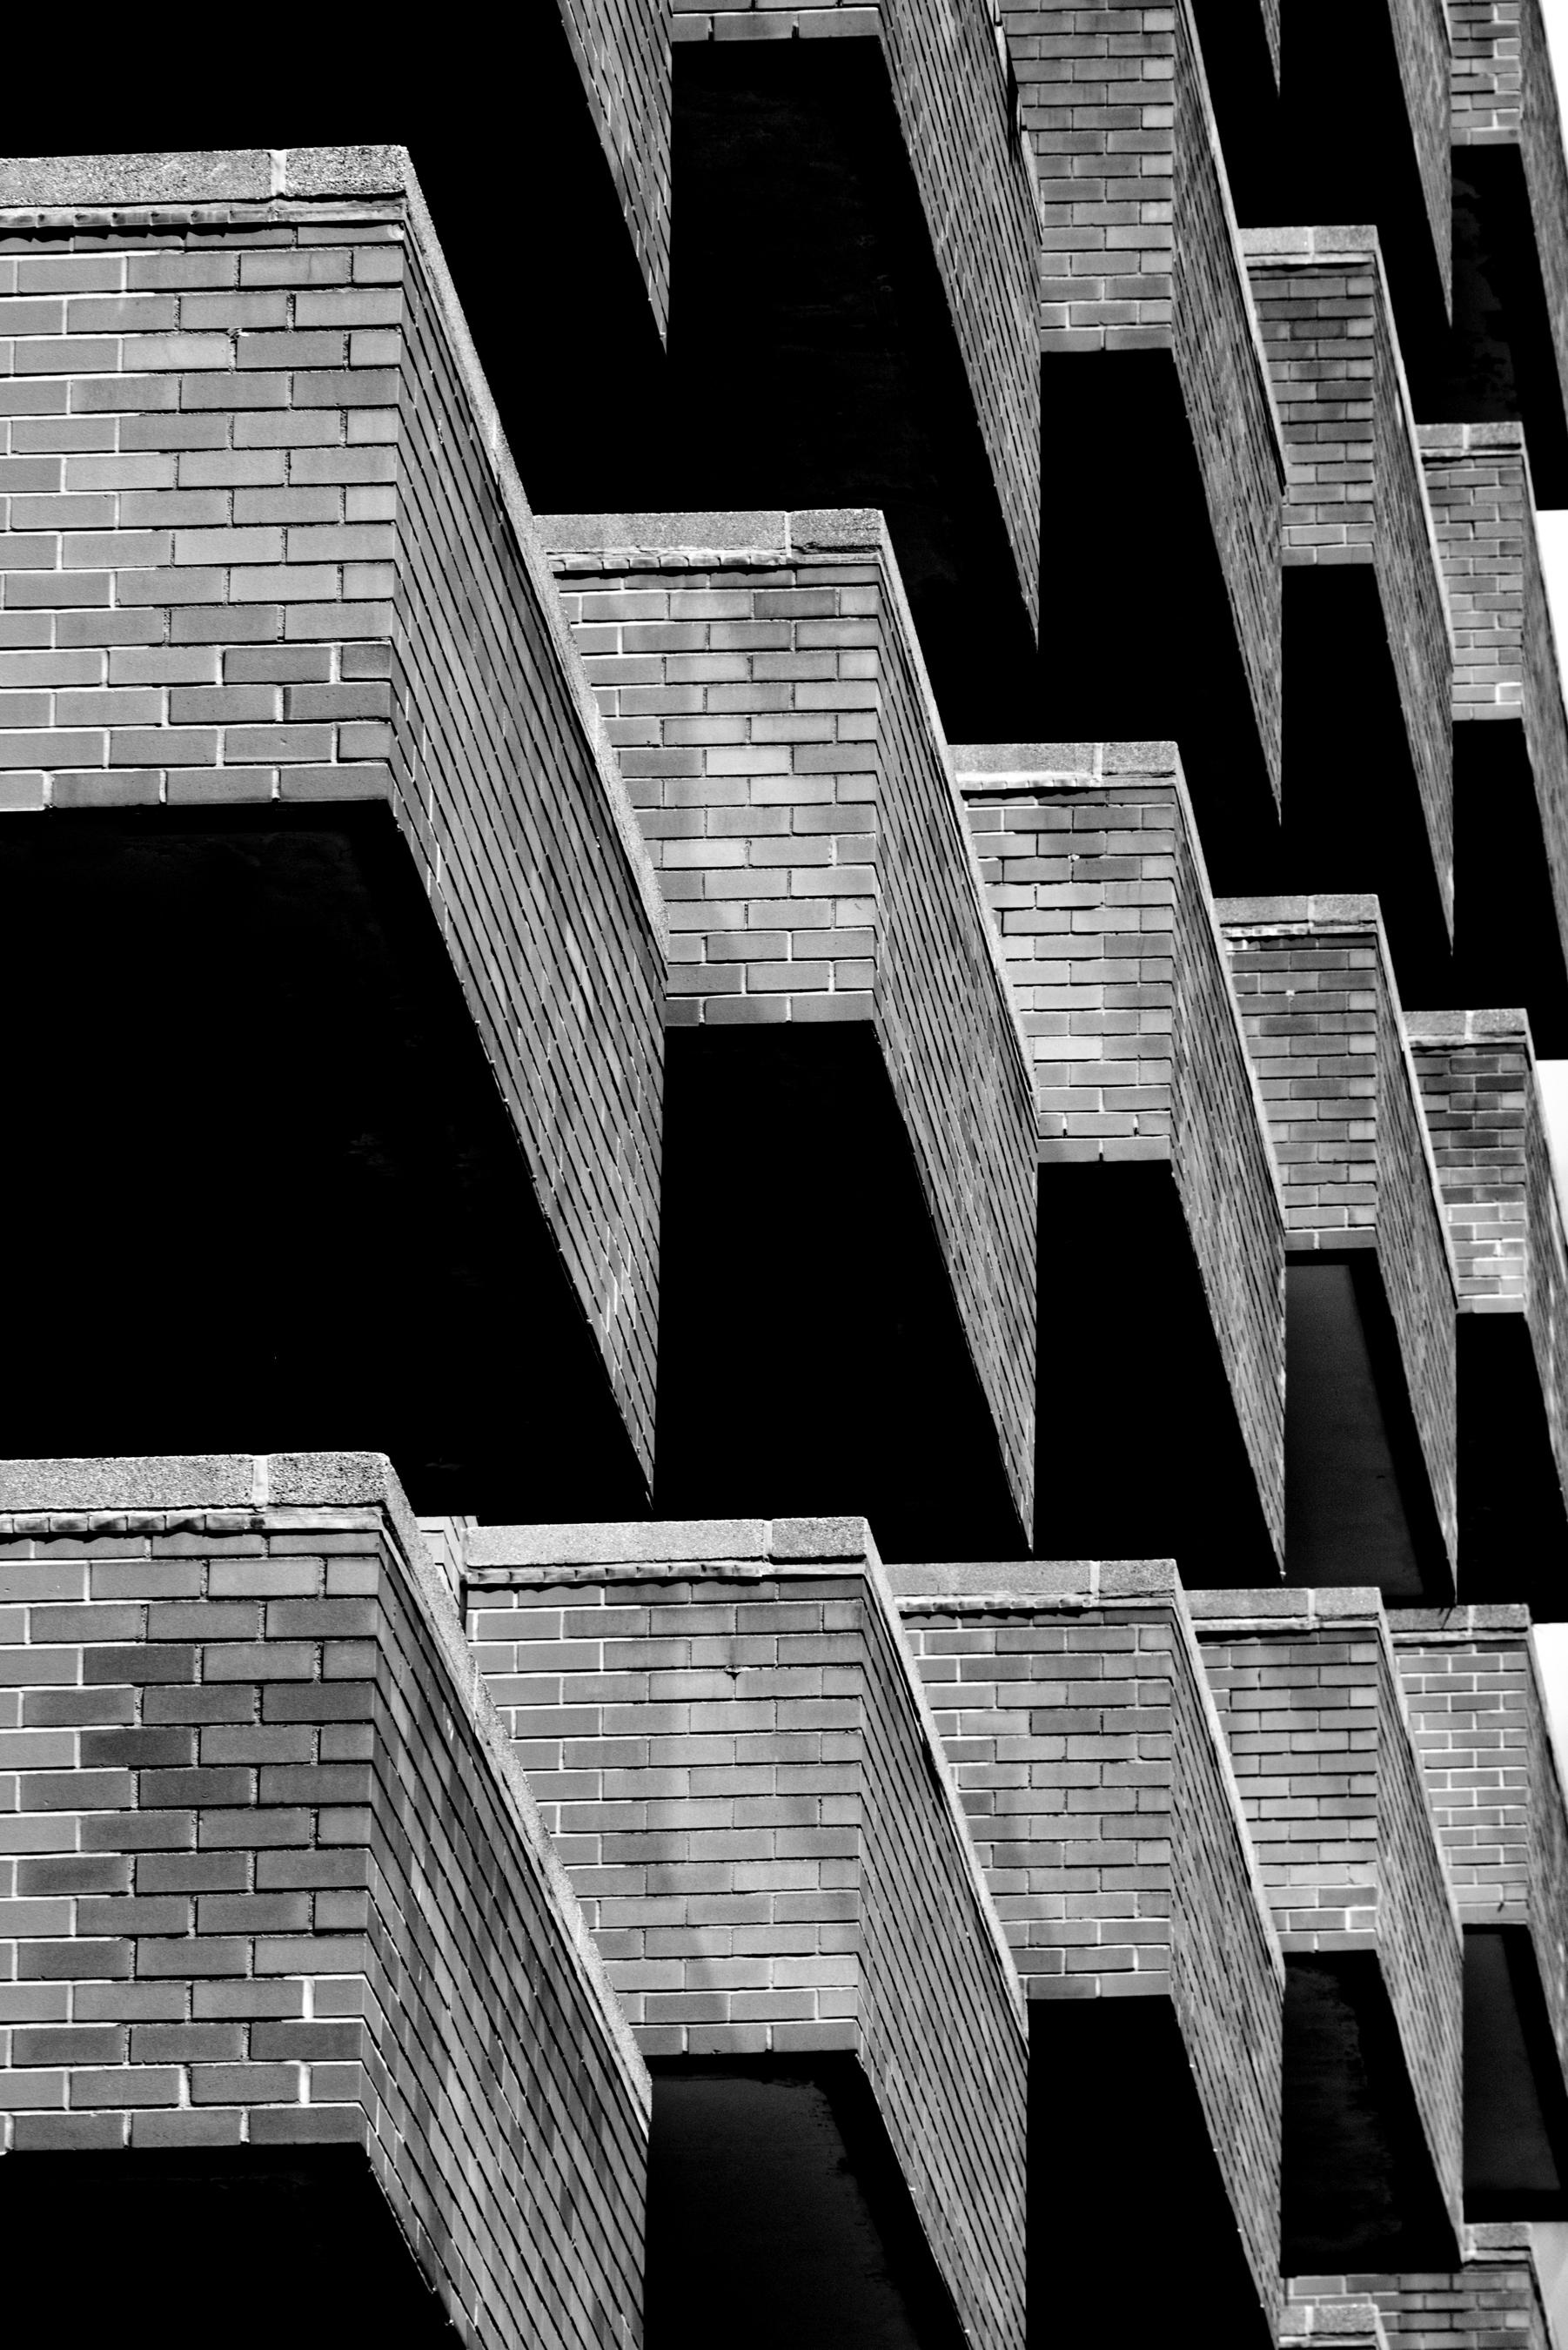 Bob Krasner Landscape Photograph - "Balcony World", photograph, city, architecture, building, geometry, pattern